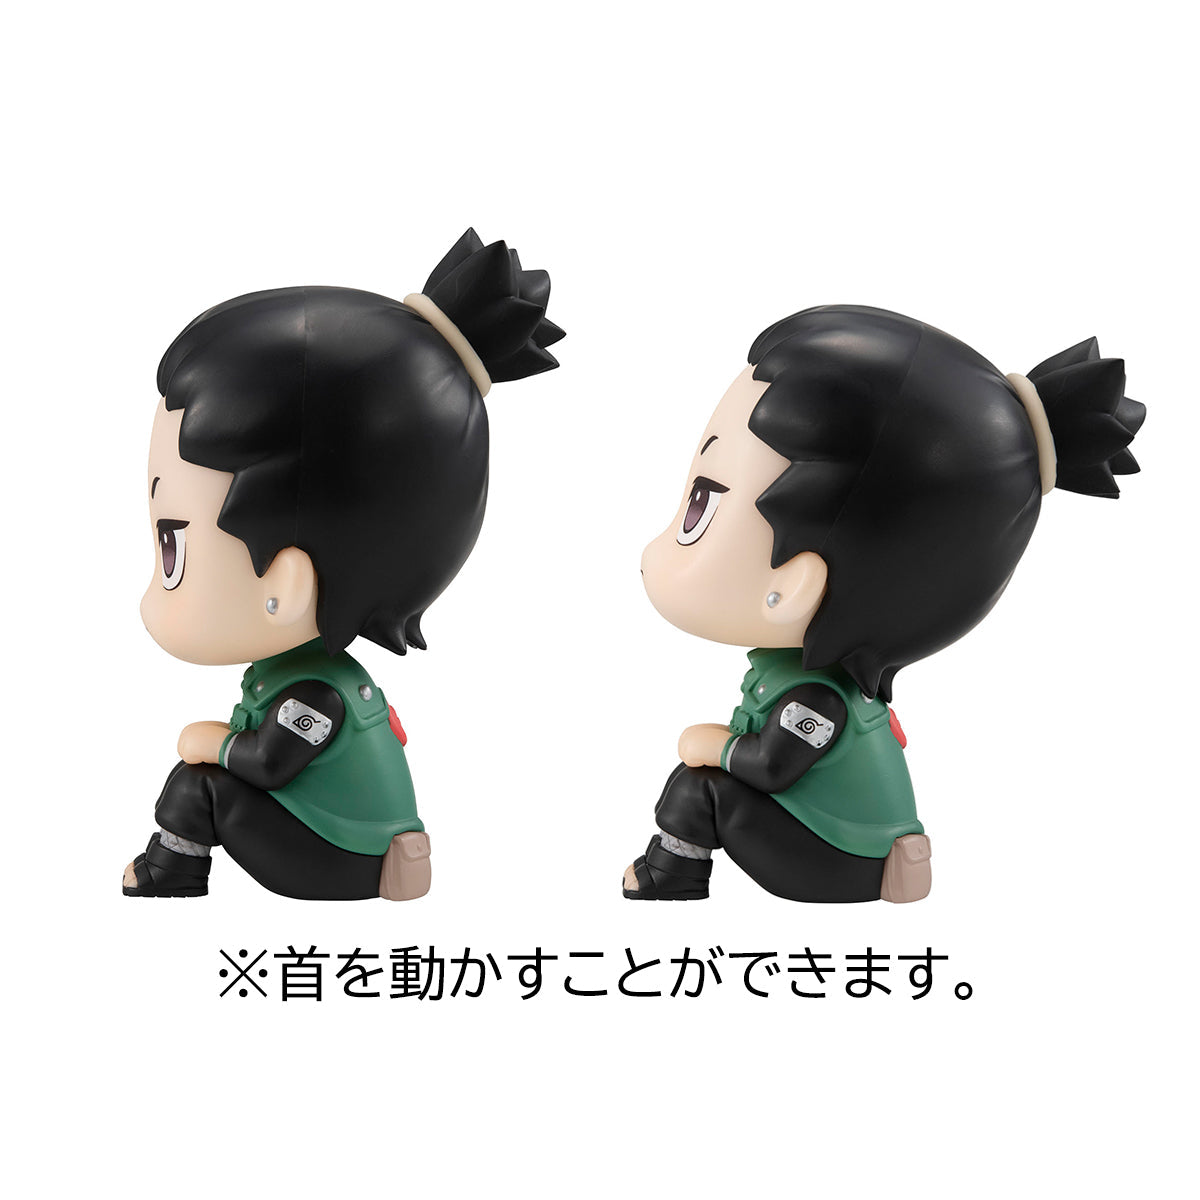 Naruto Shippuden - Shikamaru and Gaara Lookup Figure Set (with Gift) image count 6